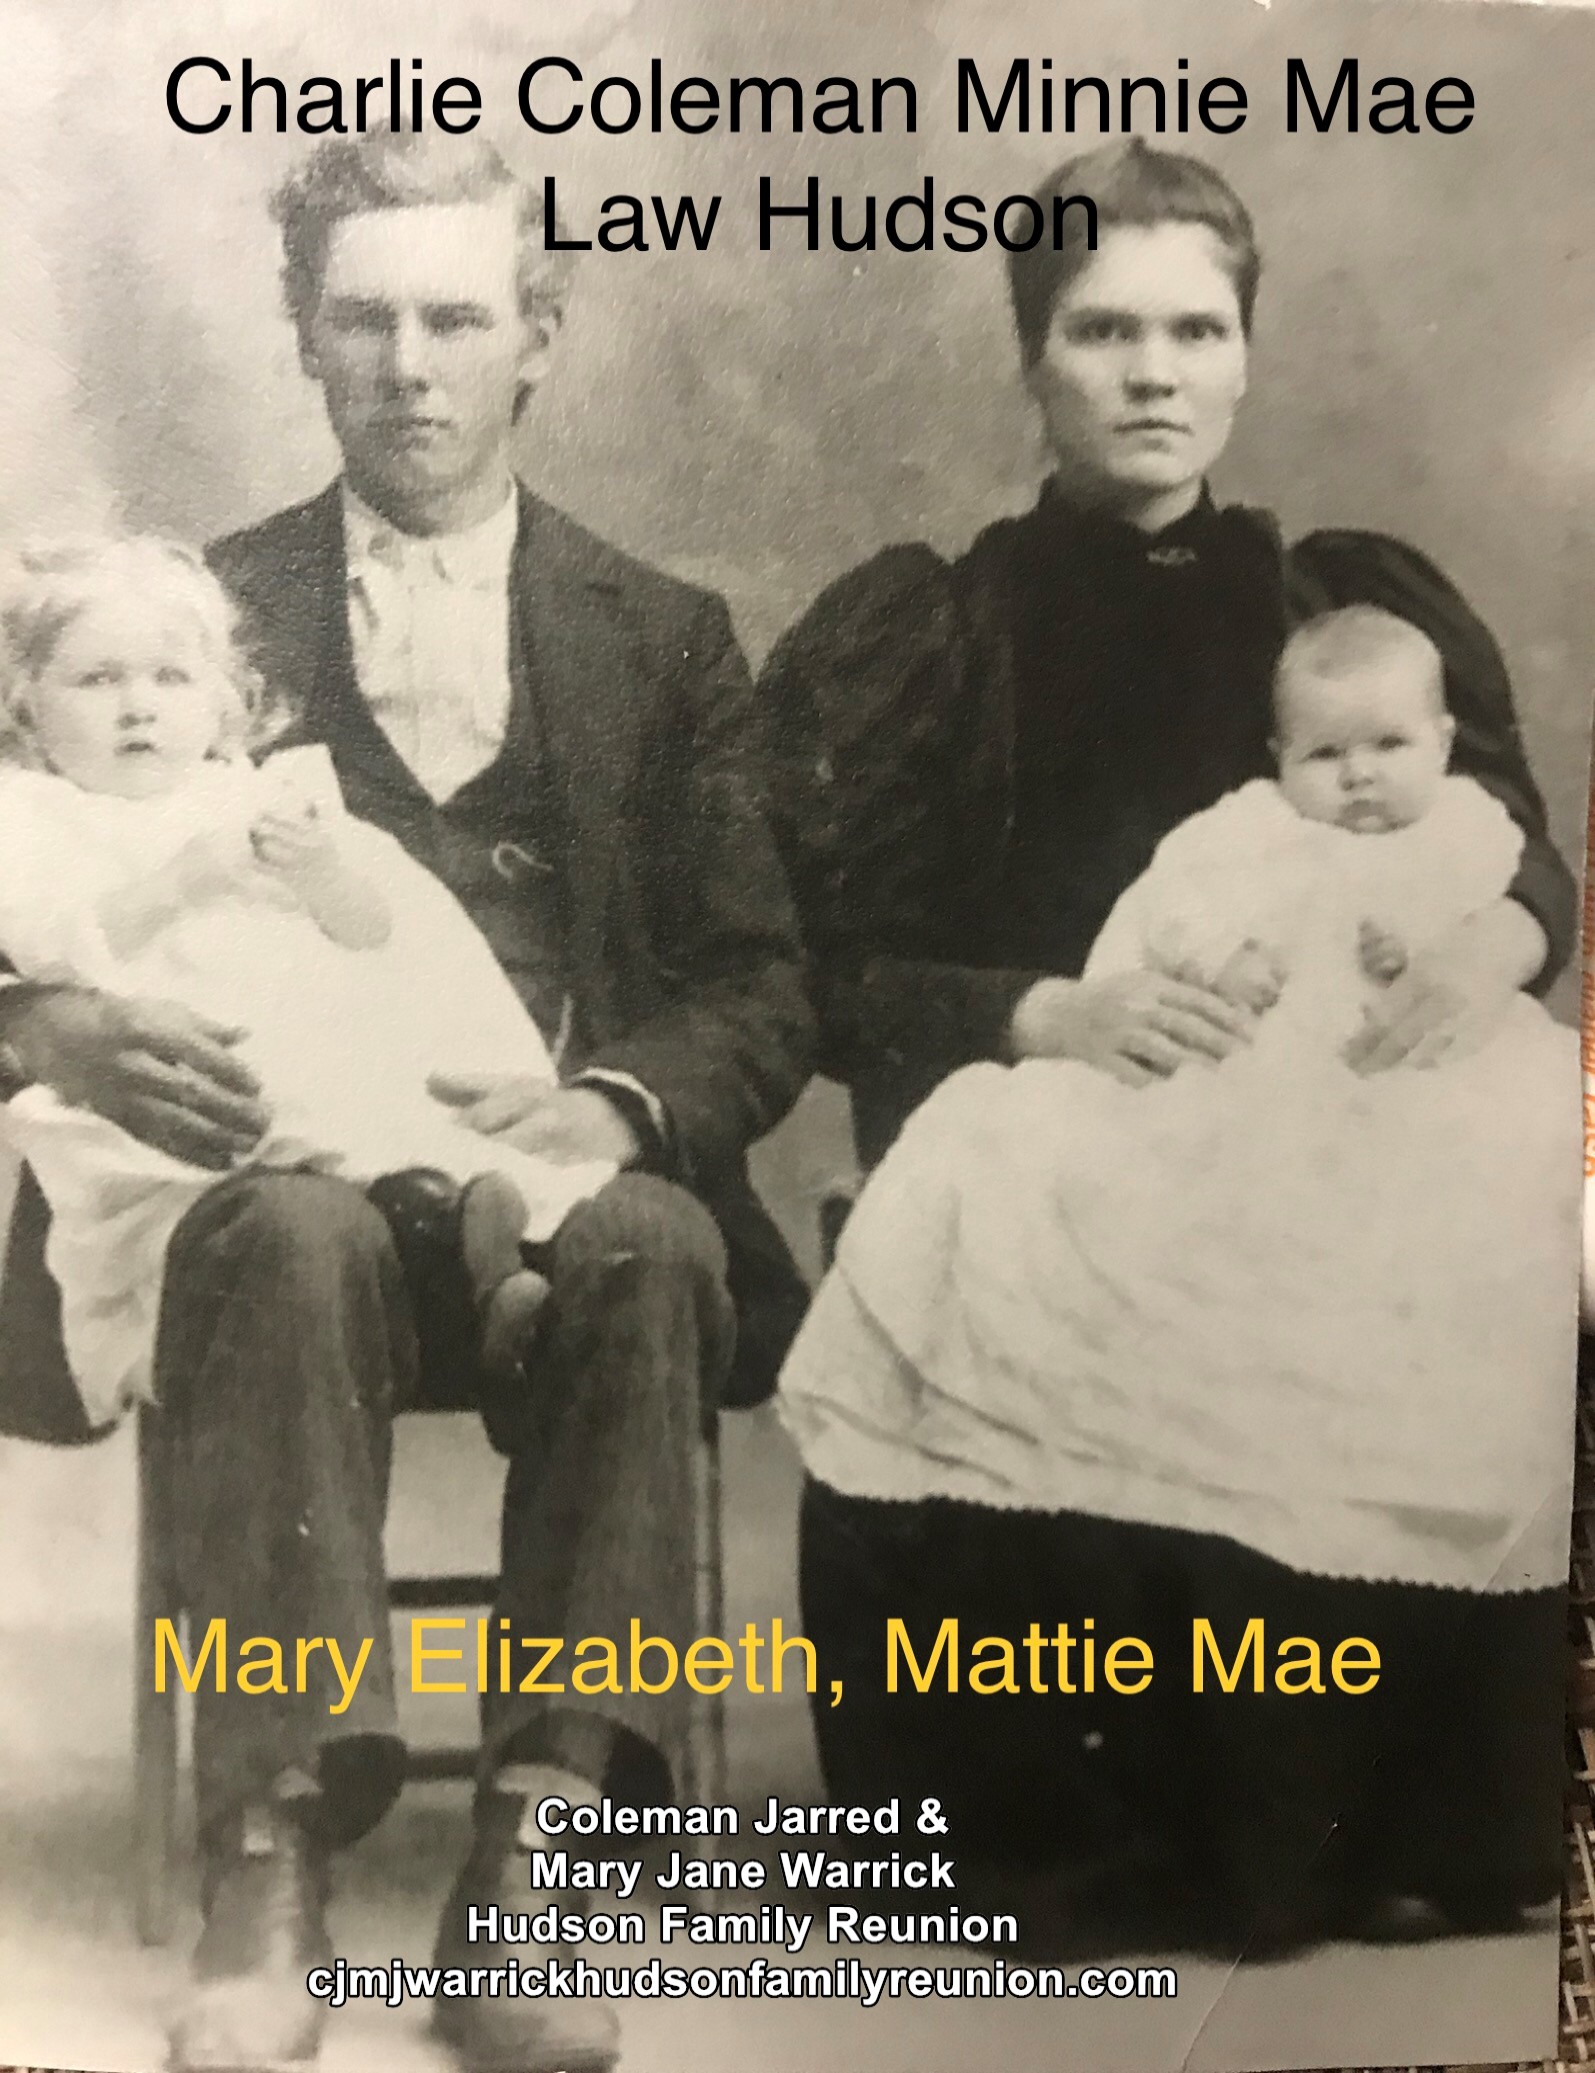 Charlie Coleman & Minnie Law Hudson, Mary Elizabeth, Mattie Mae 